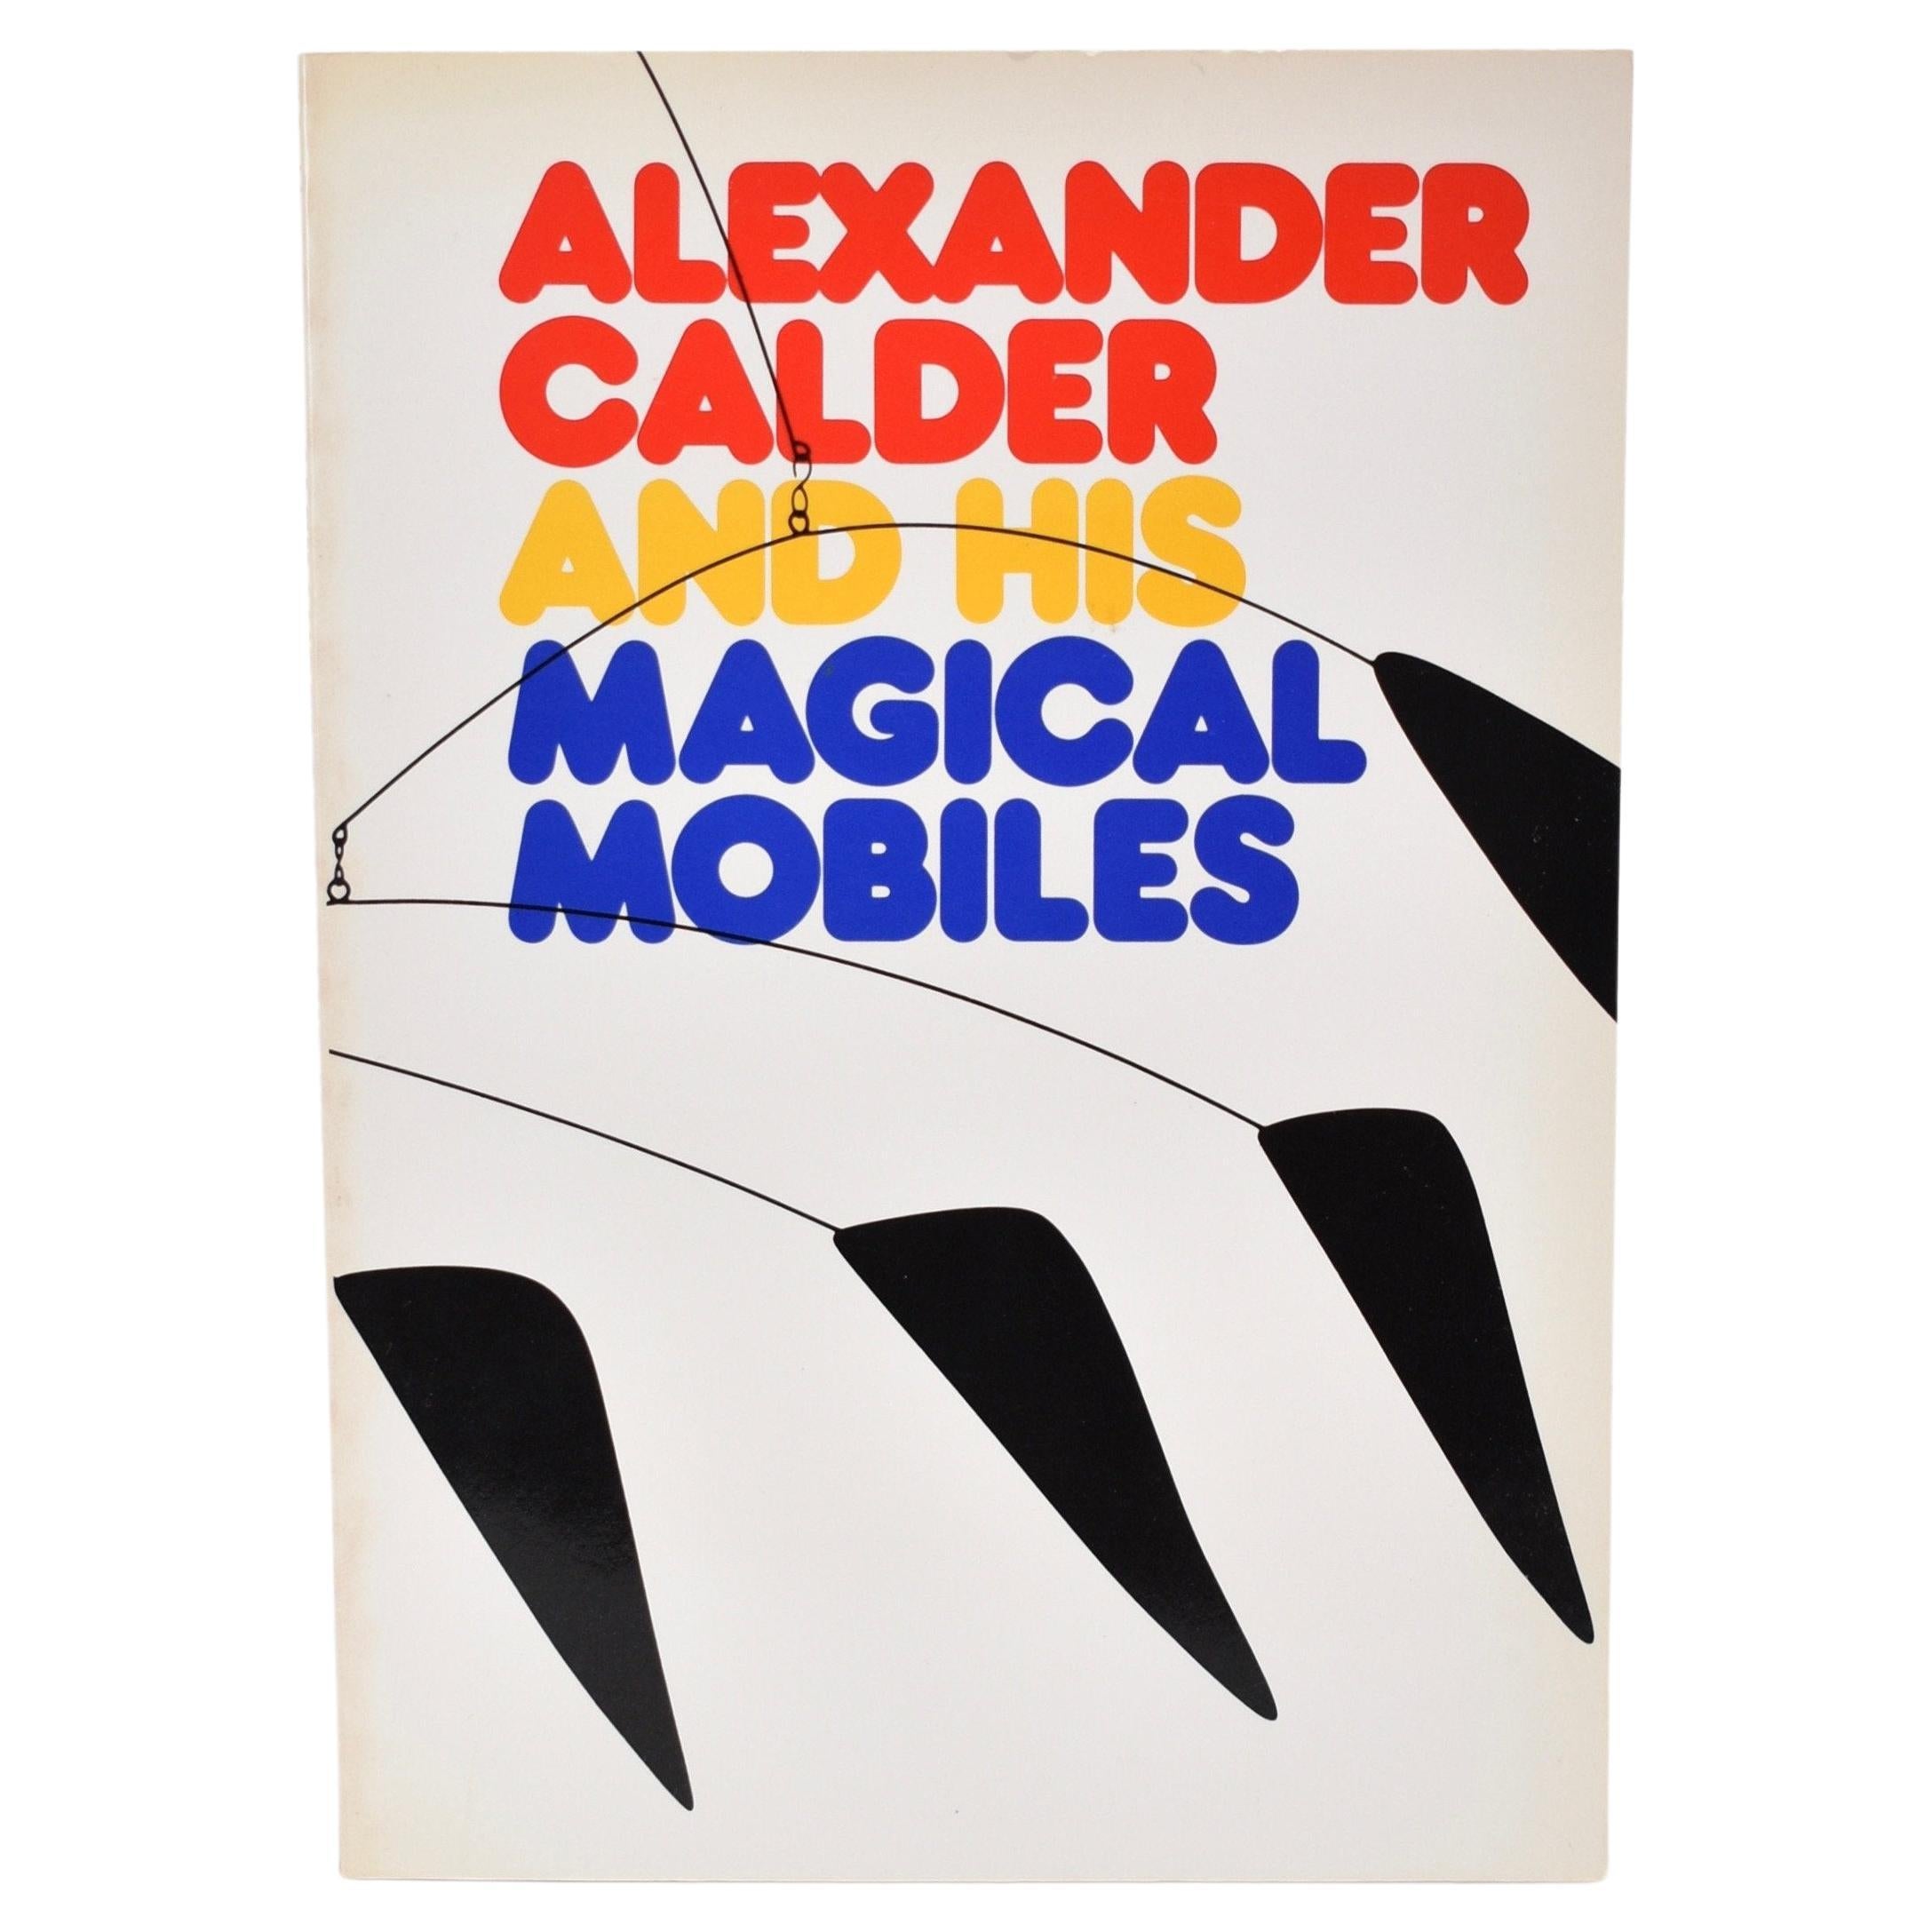 Alexander Calder and His Magical Mobiles by Jean Lipman & Margaret Aspinwall